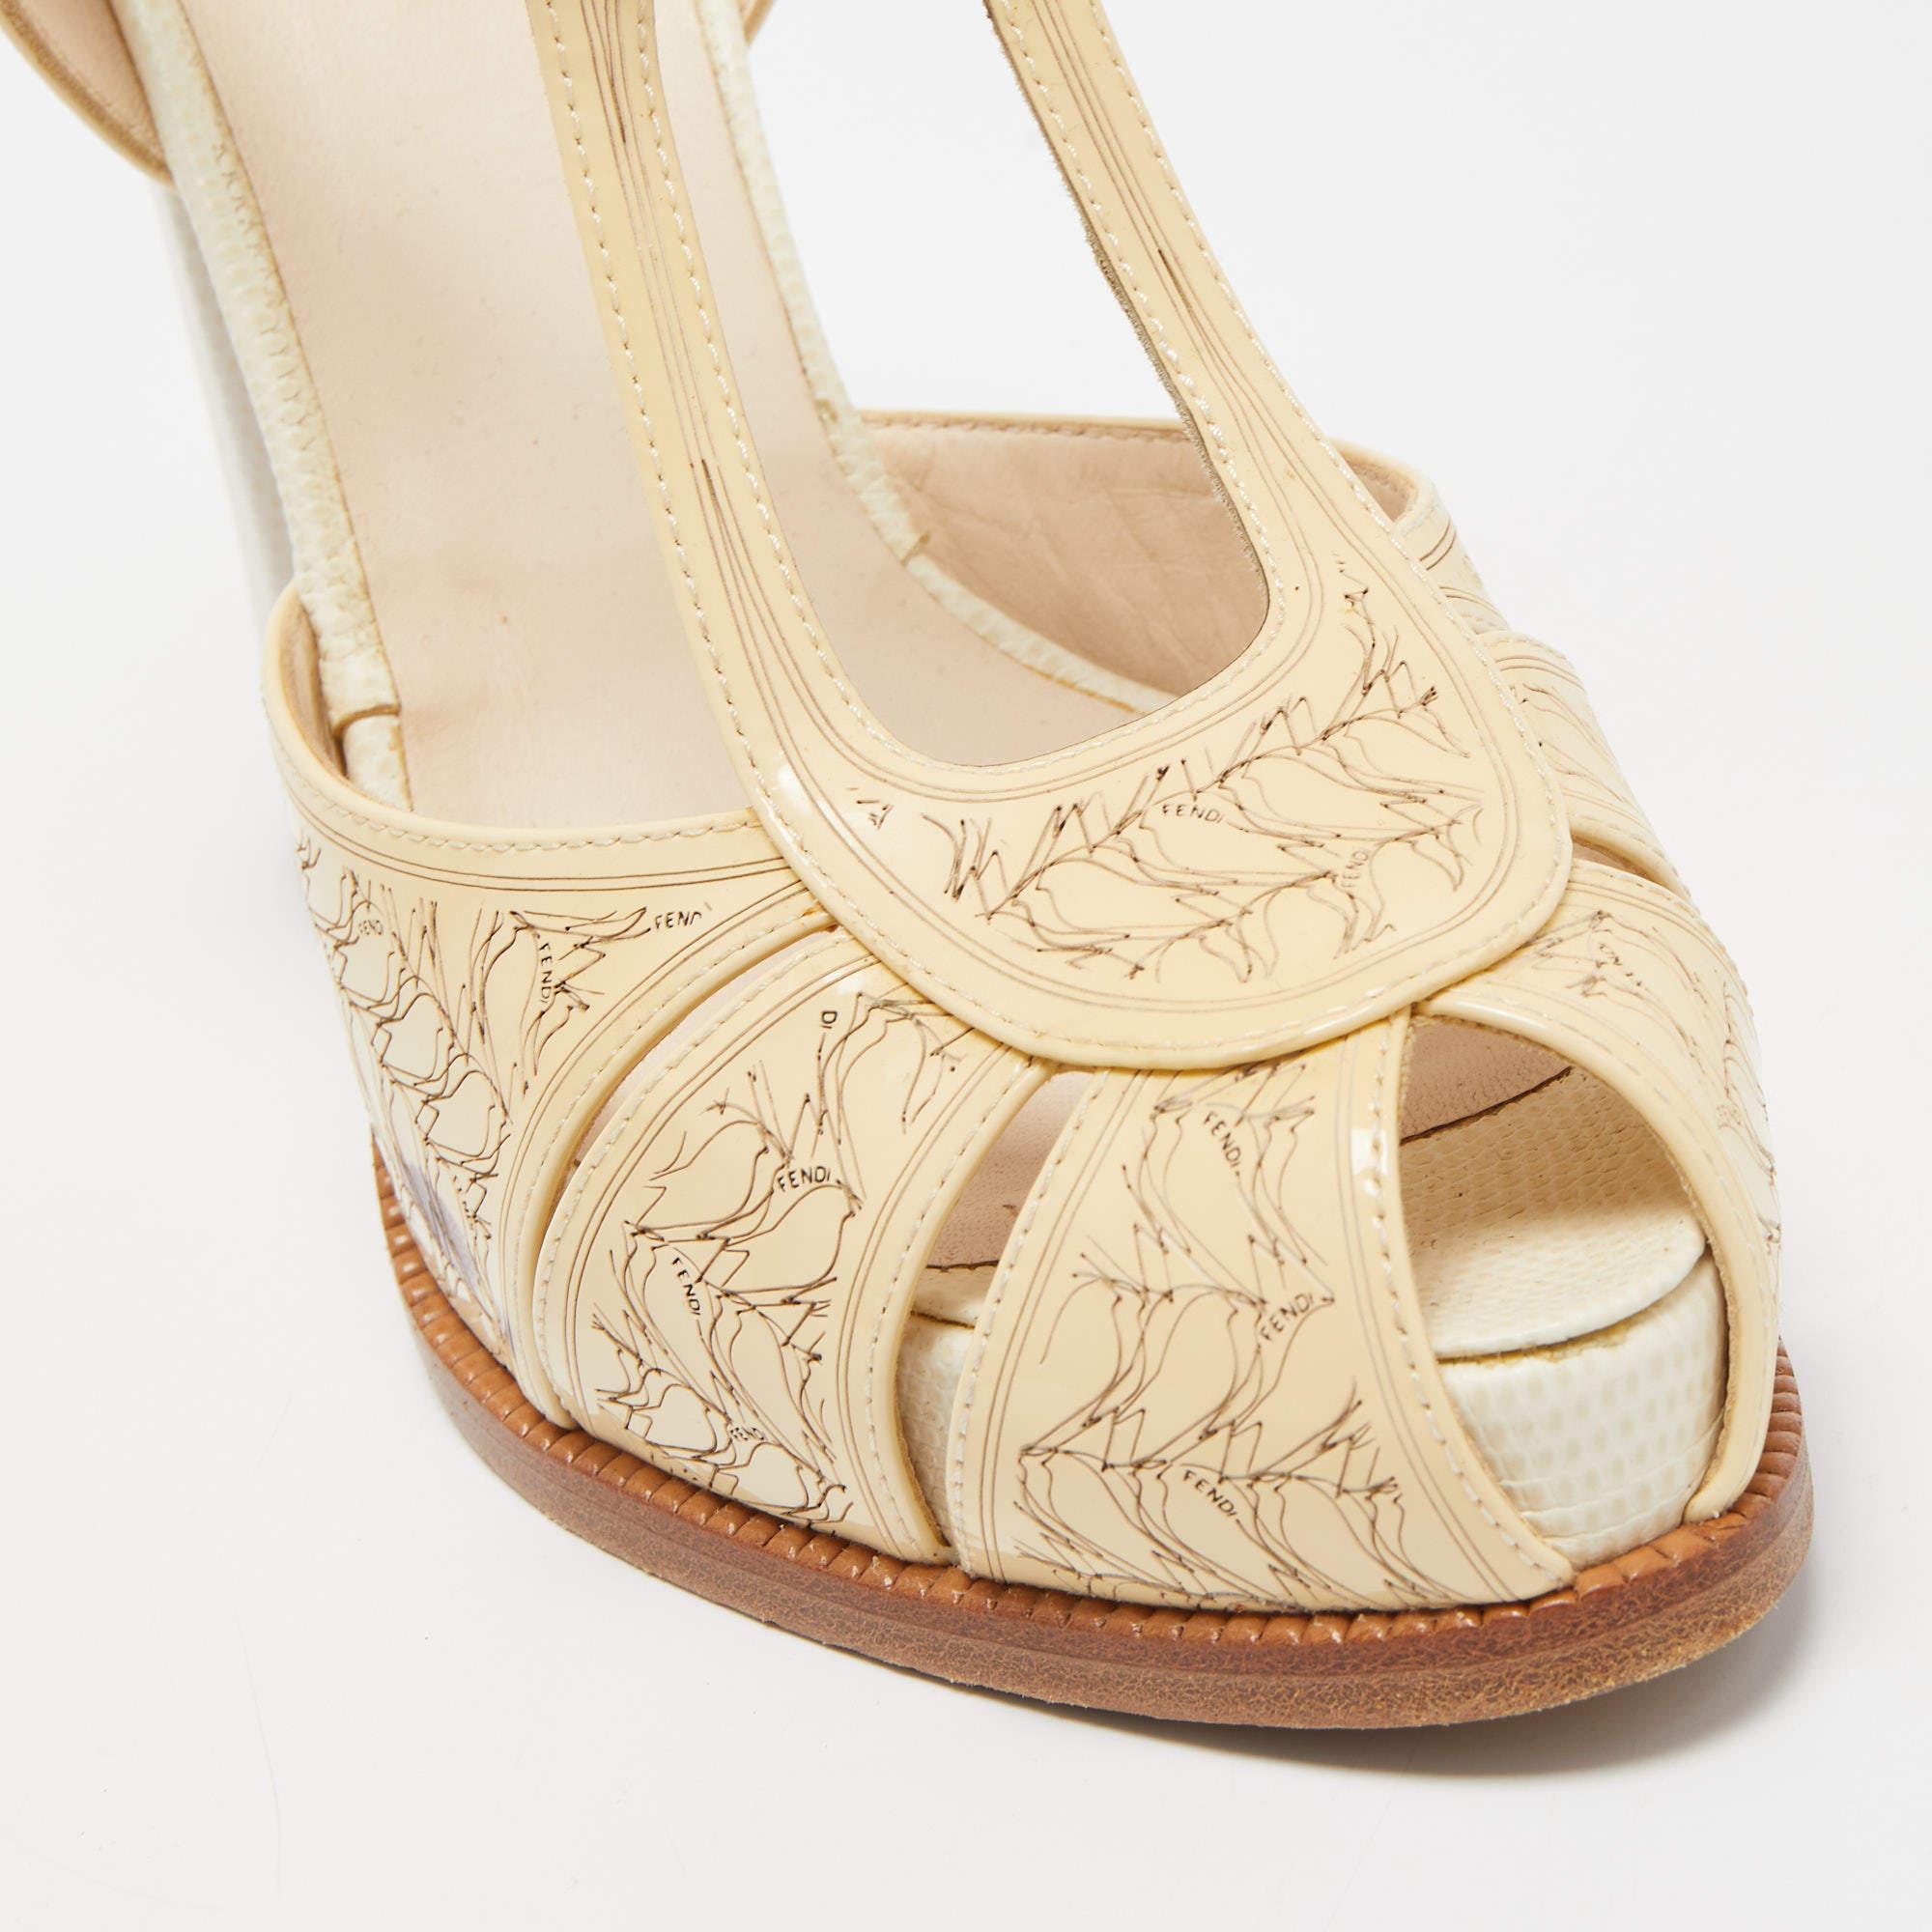 Fendi Cream/White Laser Cut Leather Block Heel Sandals Size 39 4